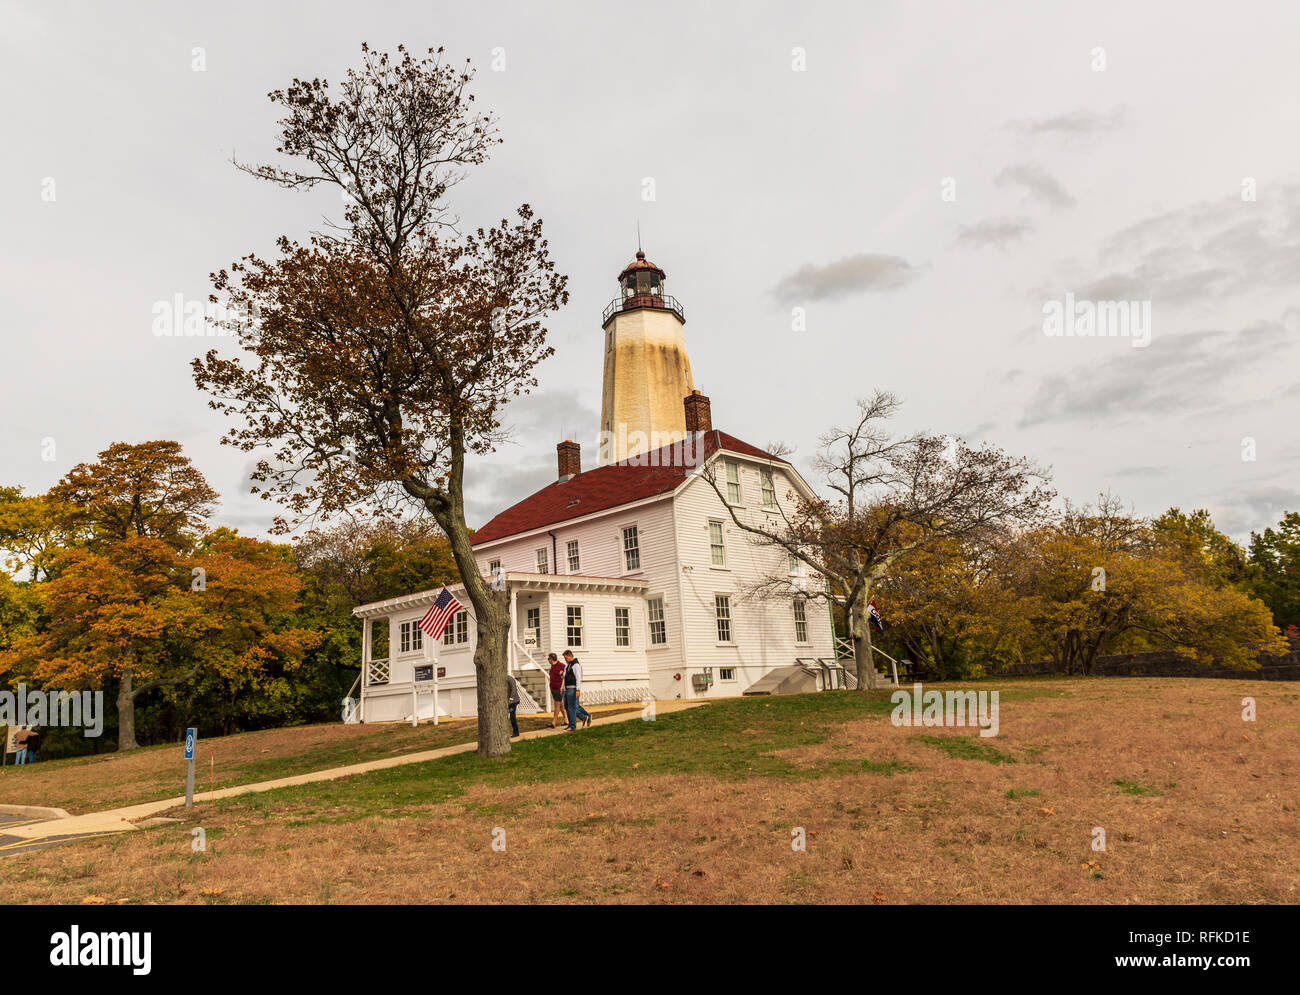 Sandy Hook, NJ, USA - 27. Oktober 2015. Das Sandy Hook Lighthouse gegen einen grauen bewölkten Himmel gesehen. Stockfoto